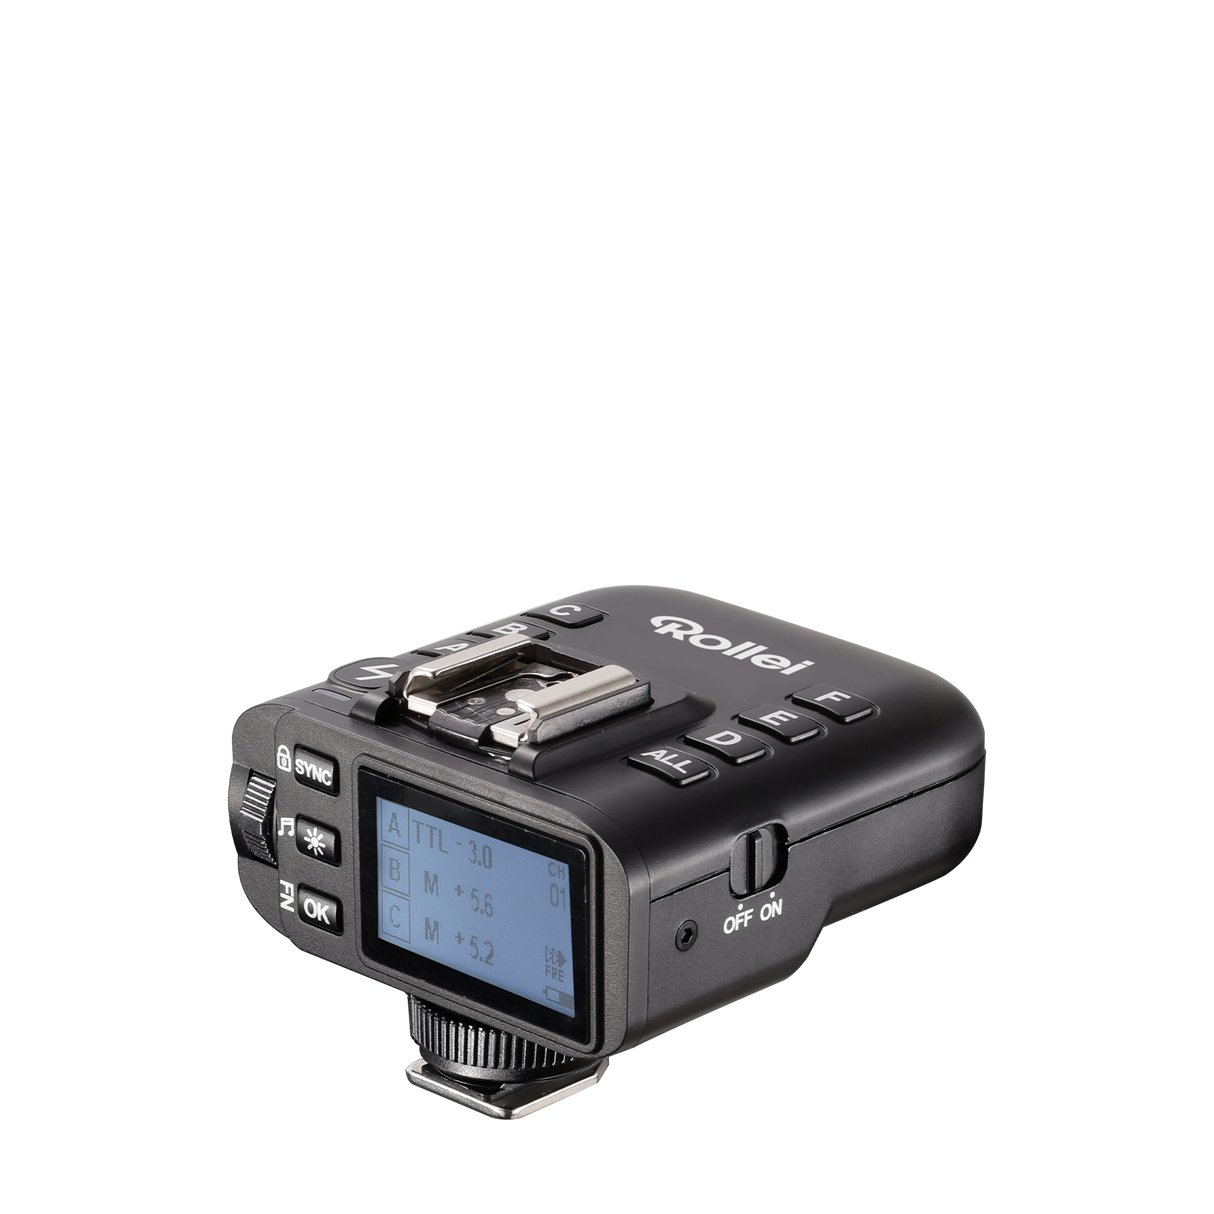 TR-Q6II Universal Studio Flash Wireless Transmitter - For Sony cameras